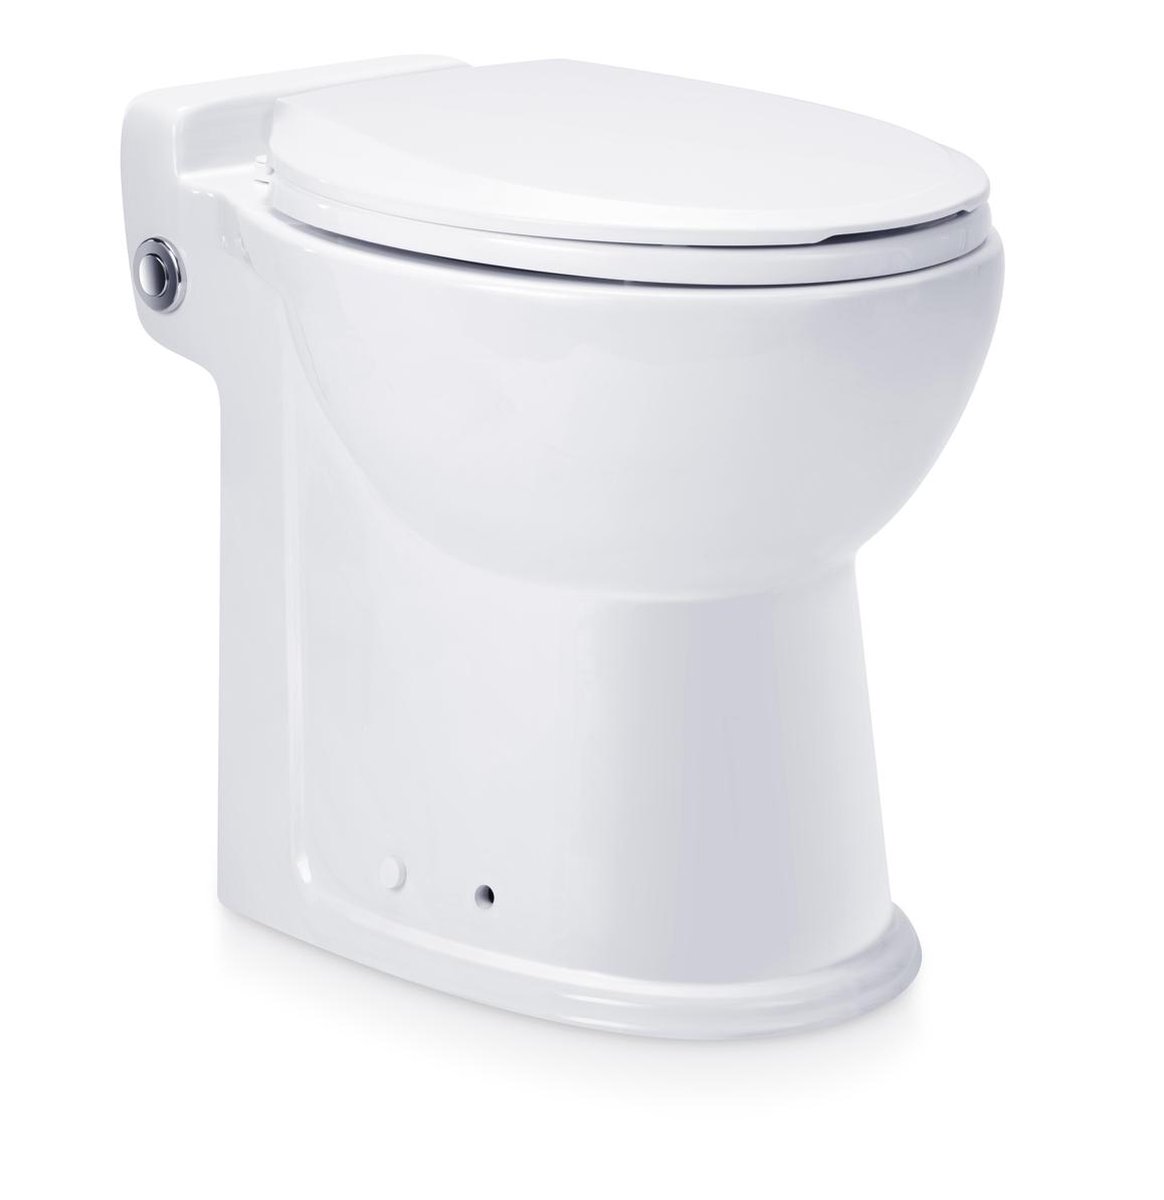 Aquamatix Compact - Toilet met ingebouwde broyeur WC vermaler - Wit keramiek